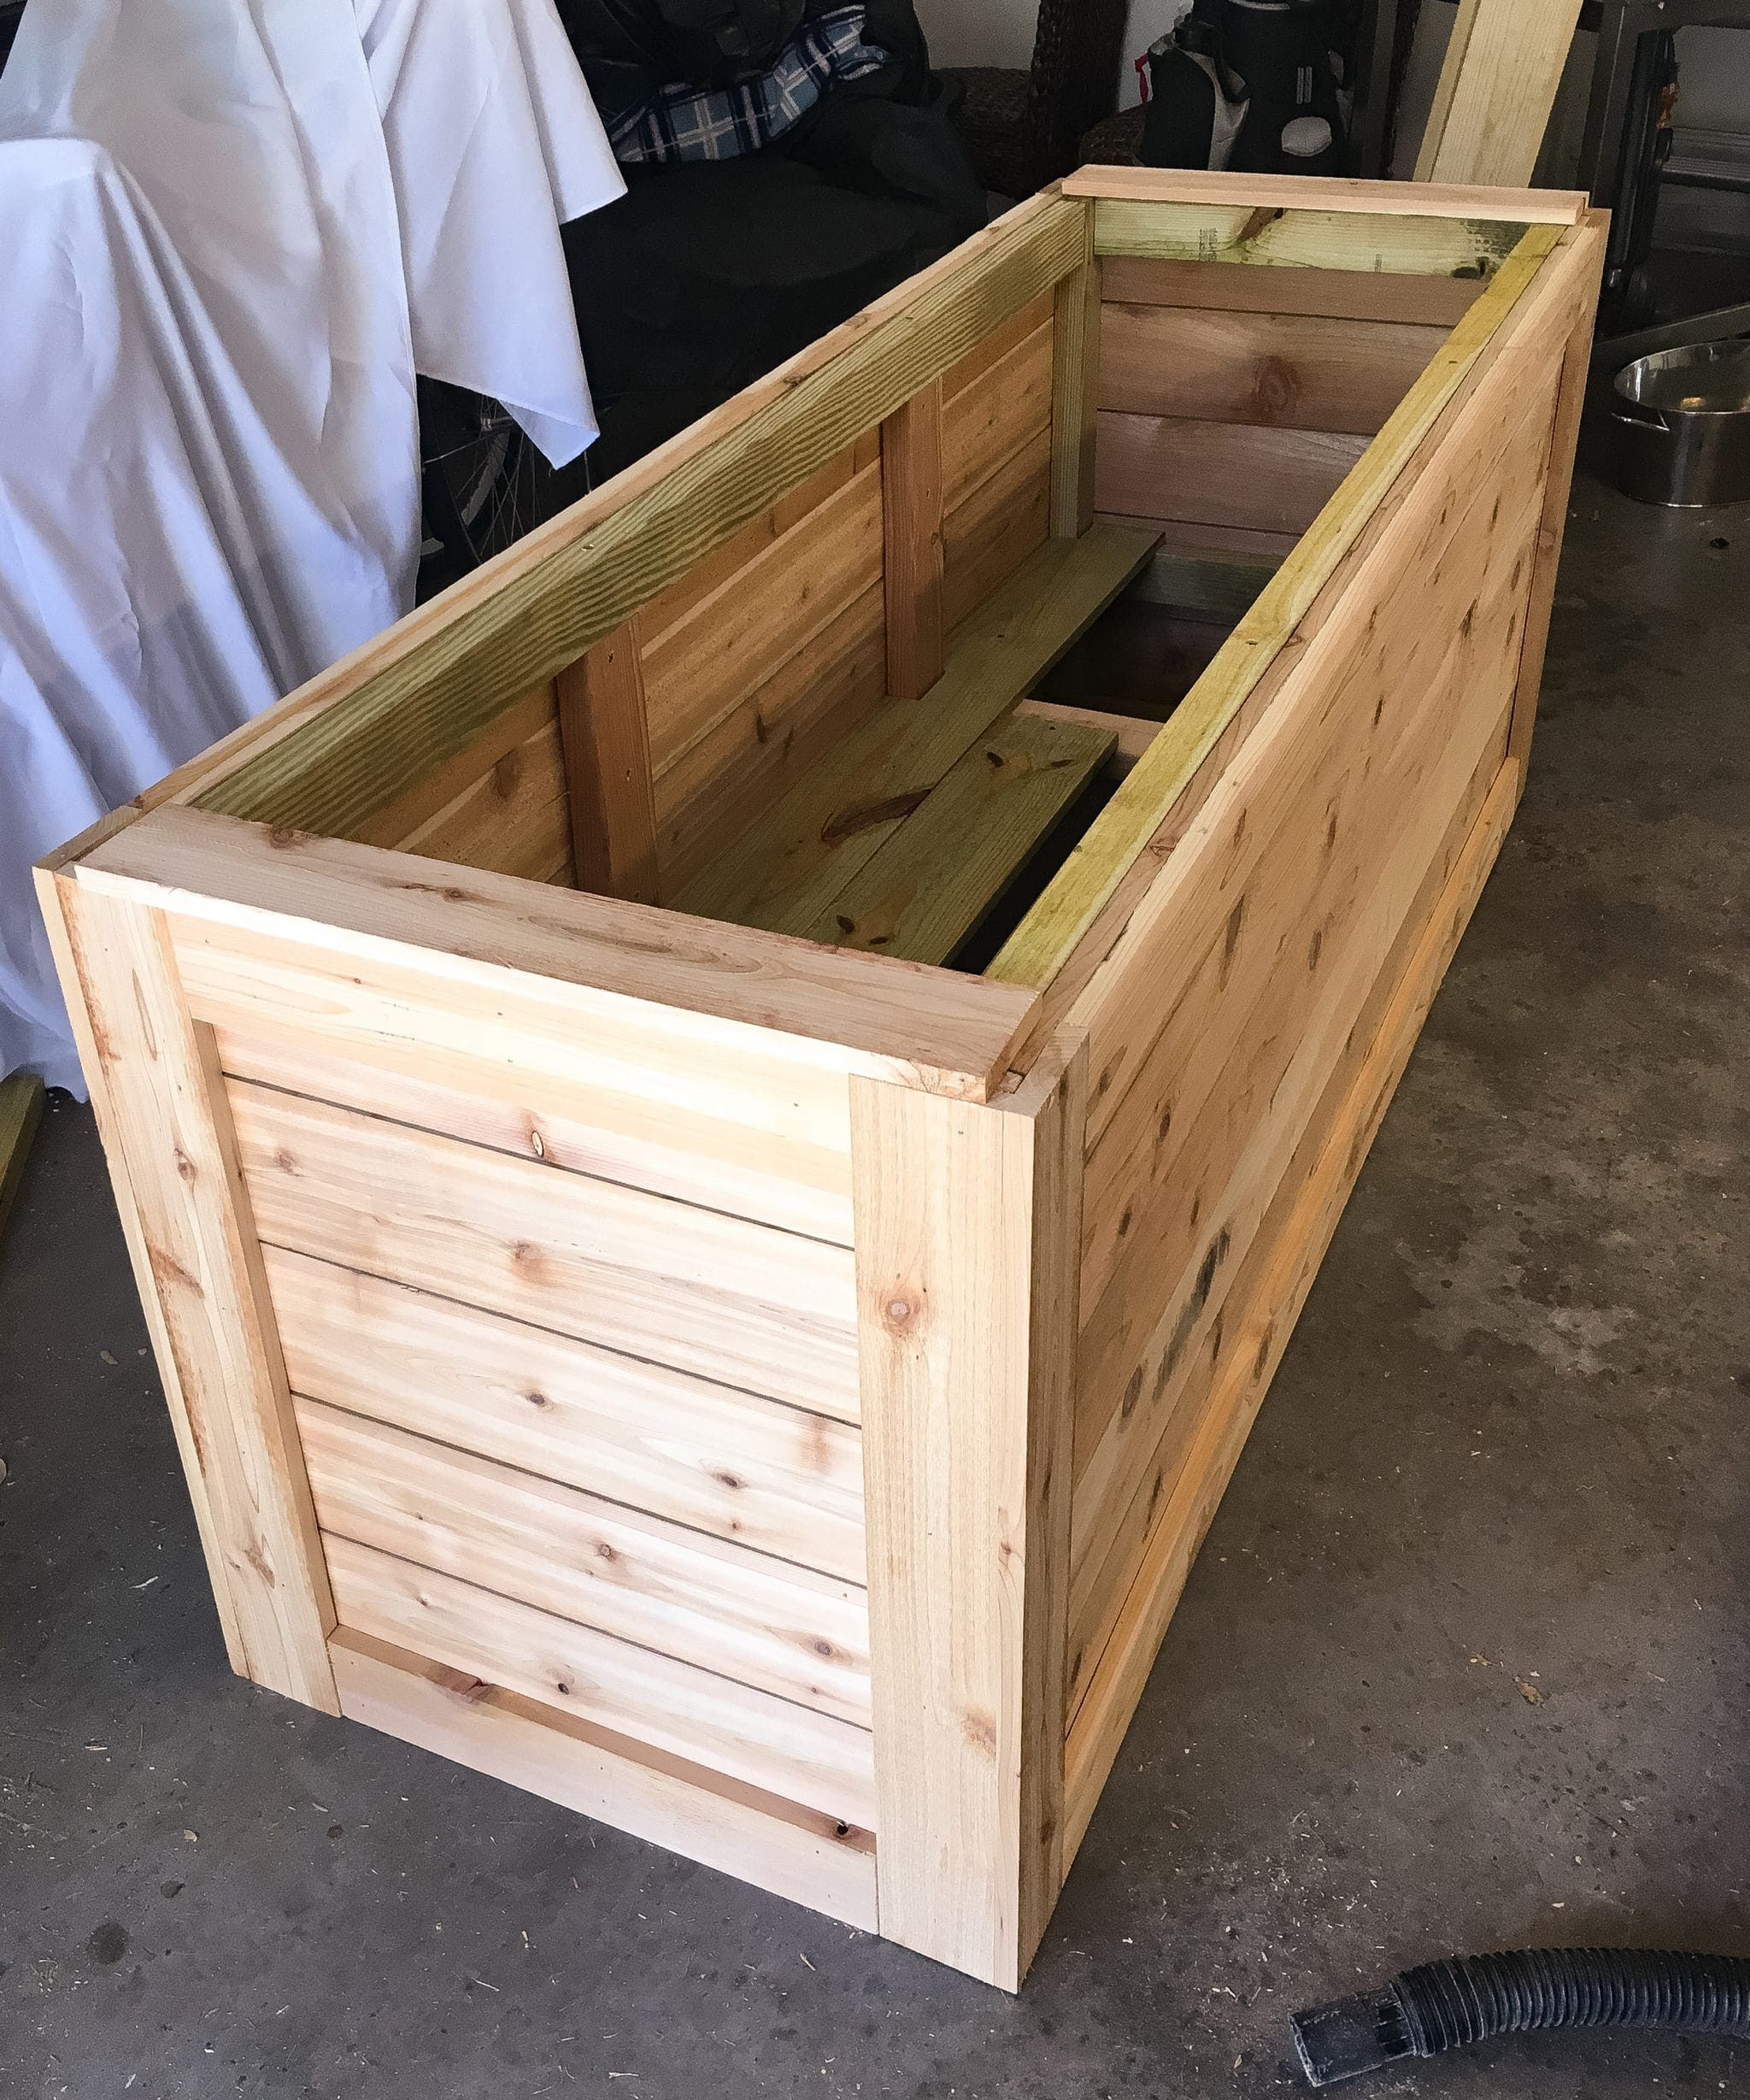 Best ideas about DIY Wood Box
. Save or Pin BACKYARD DIY SERIES PART IIII Cedar Wood Planter Box Now.